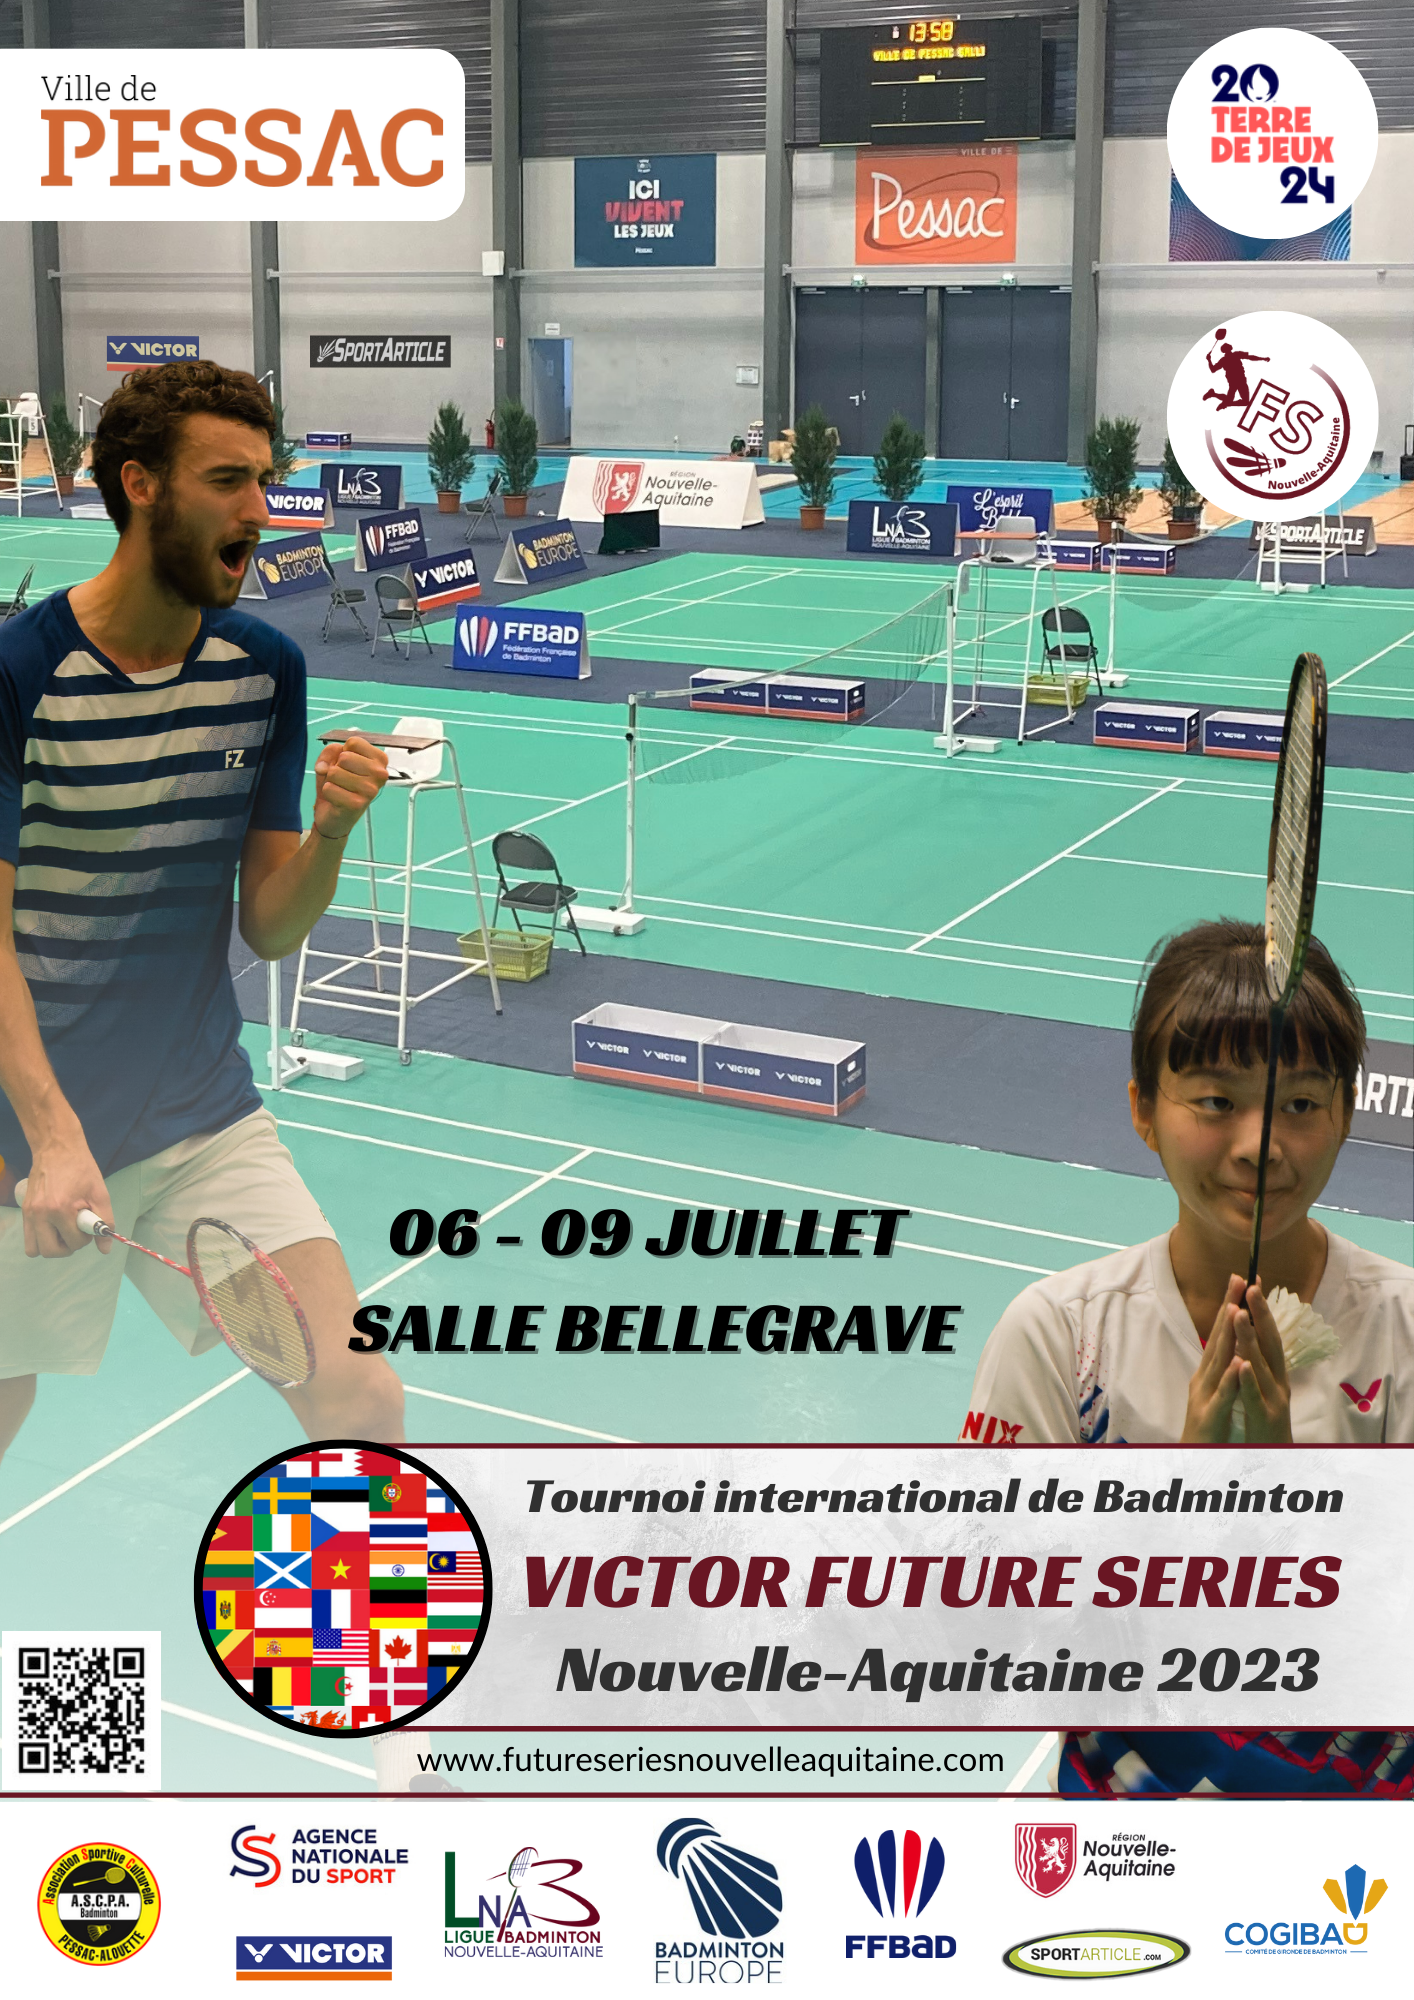 Victor Future Series Nouvelle-Aquitaine